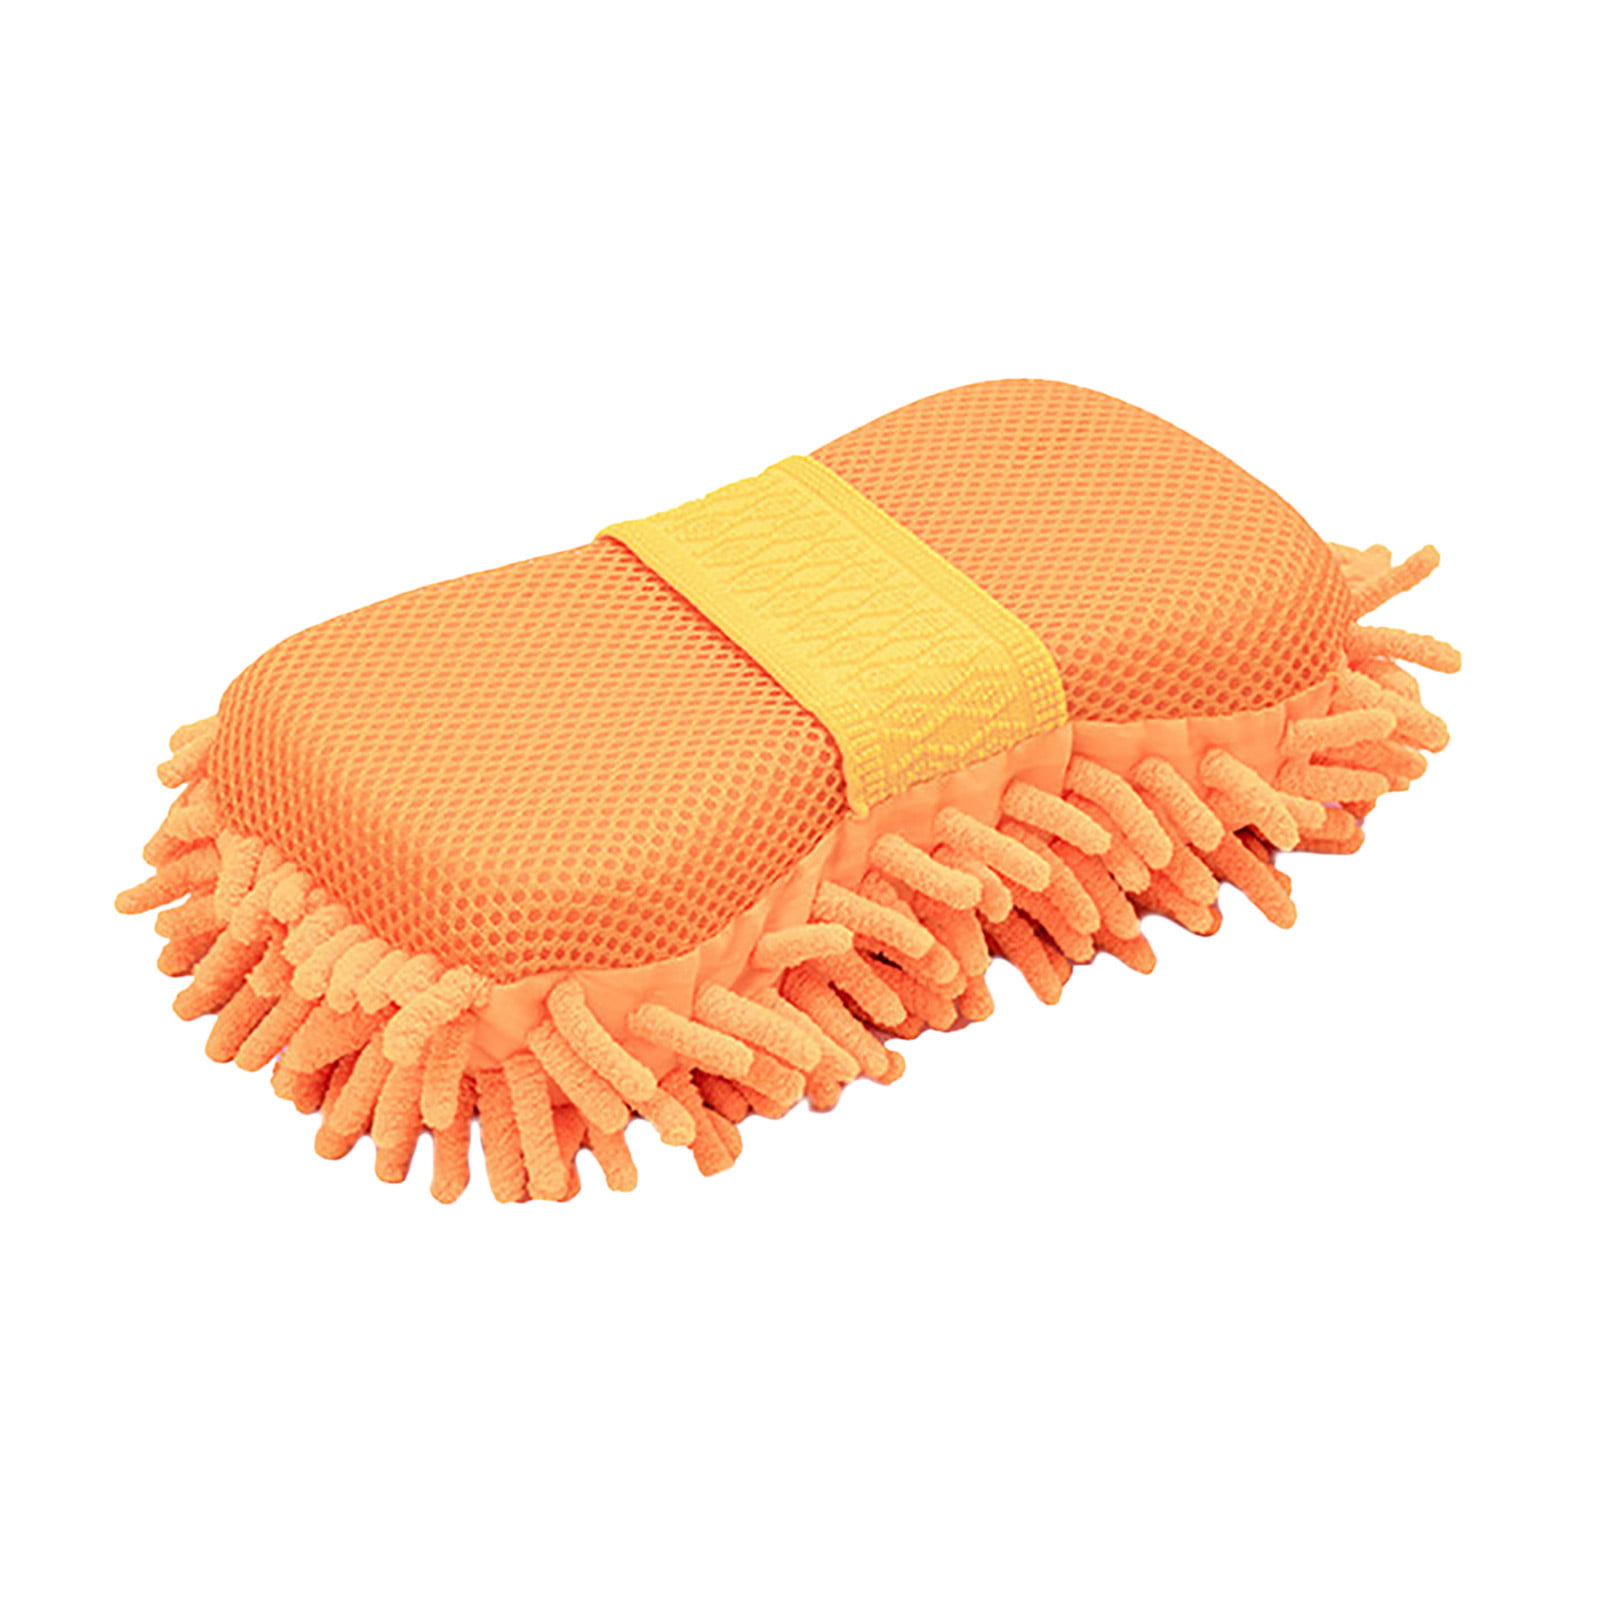 Car Wash Brush Sponge Mitt Pad Soft Home Car Cleaning Tool Chenille Microfiber 